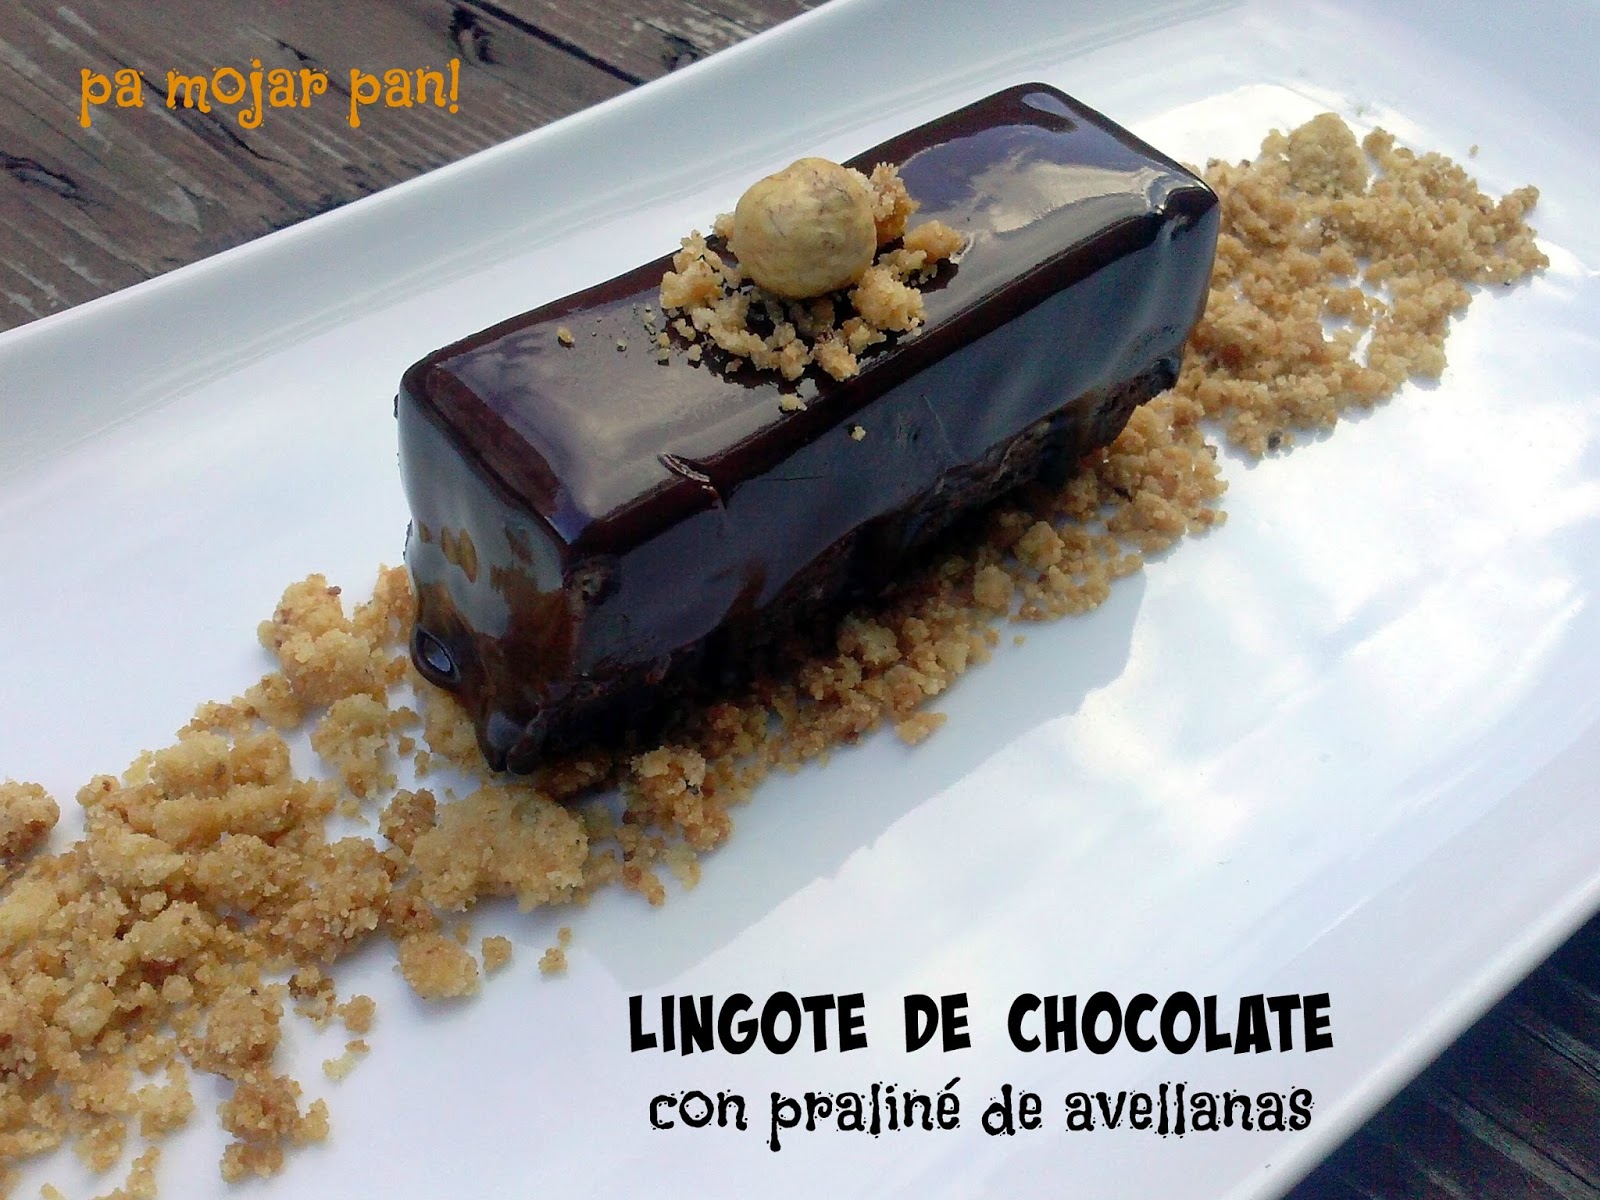 pa mojar pan!: Lingote de chocolate con praliné de avellanas